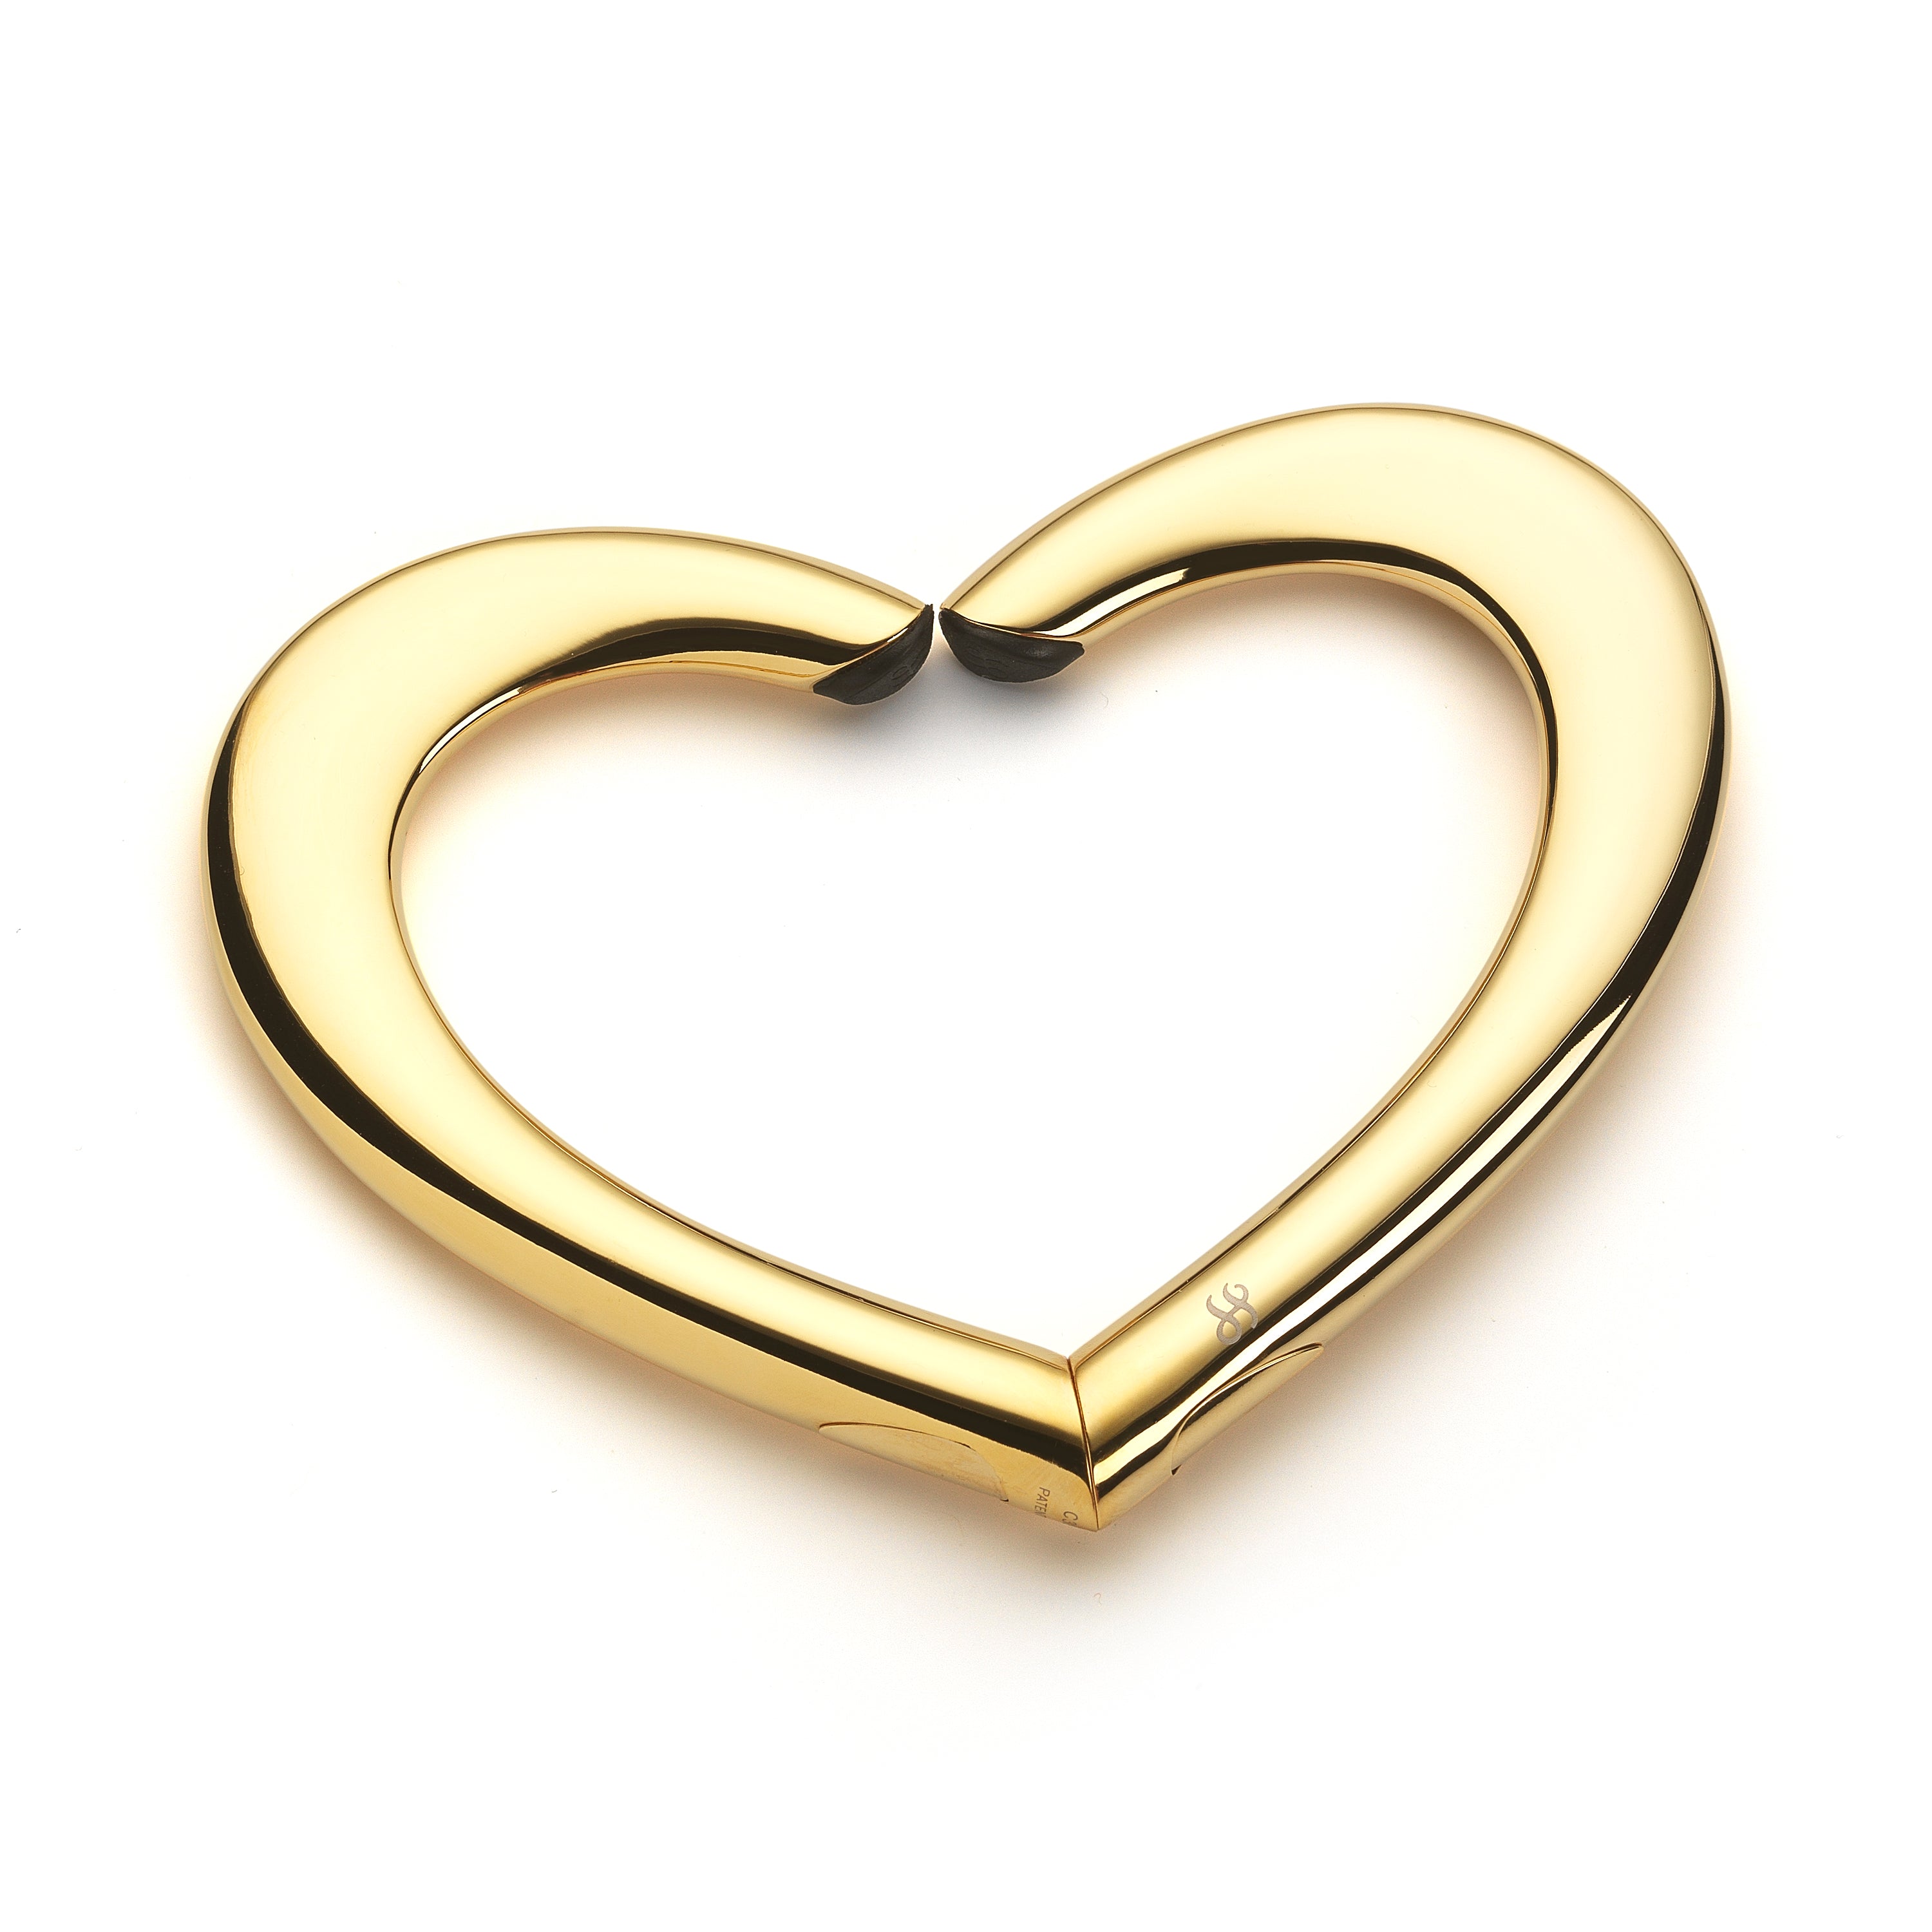 Heart - set of 3 purse hangers gold 22k, platinum  & black